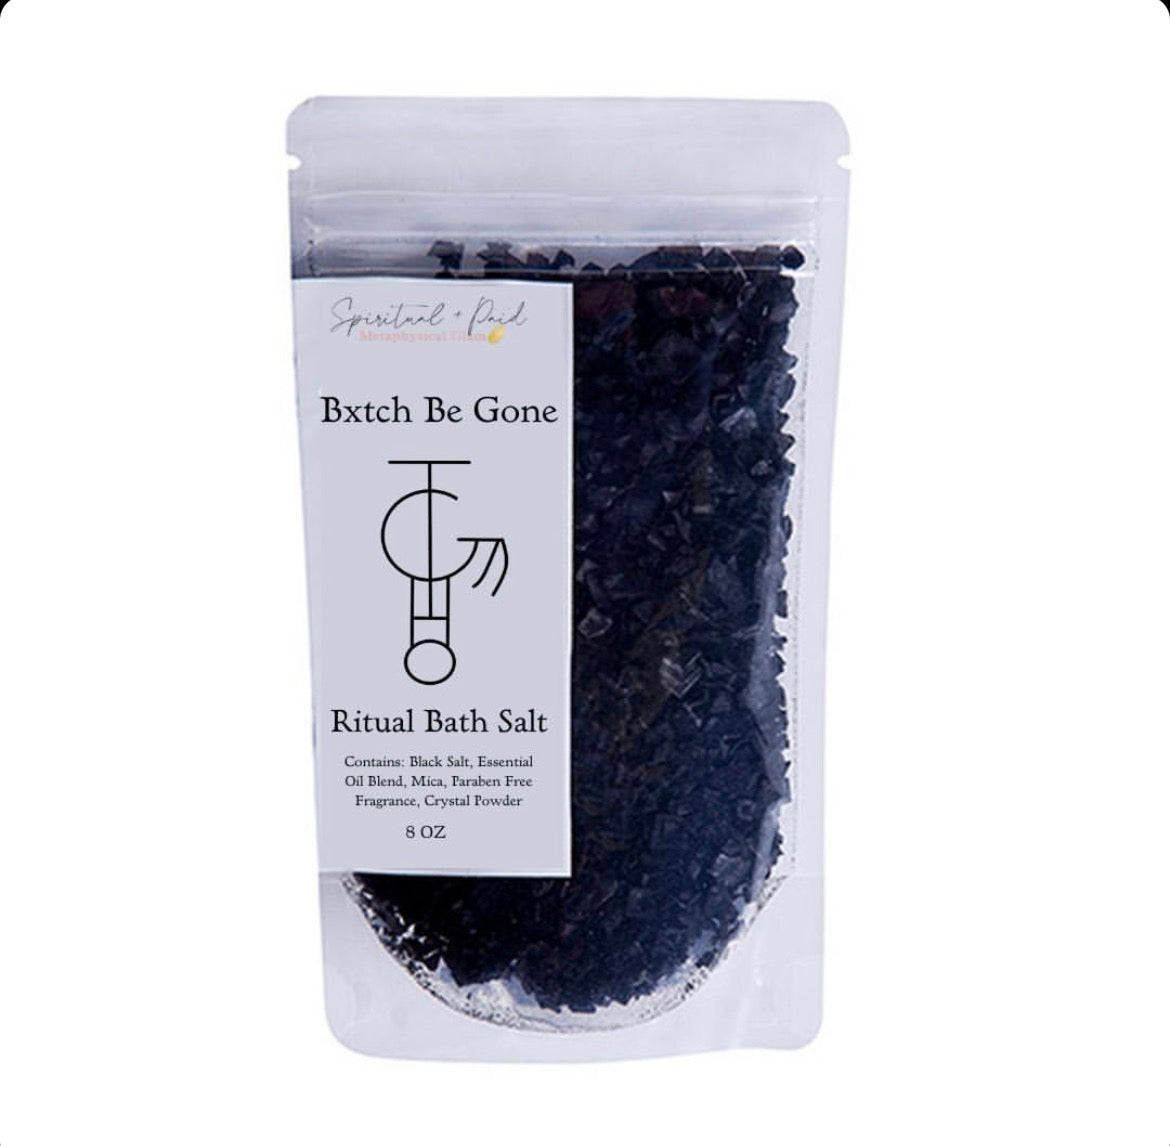 Bxtch Be Gone ~ Protection Ritual Bath Salt